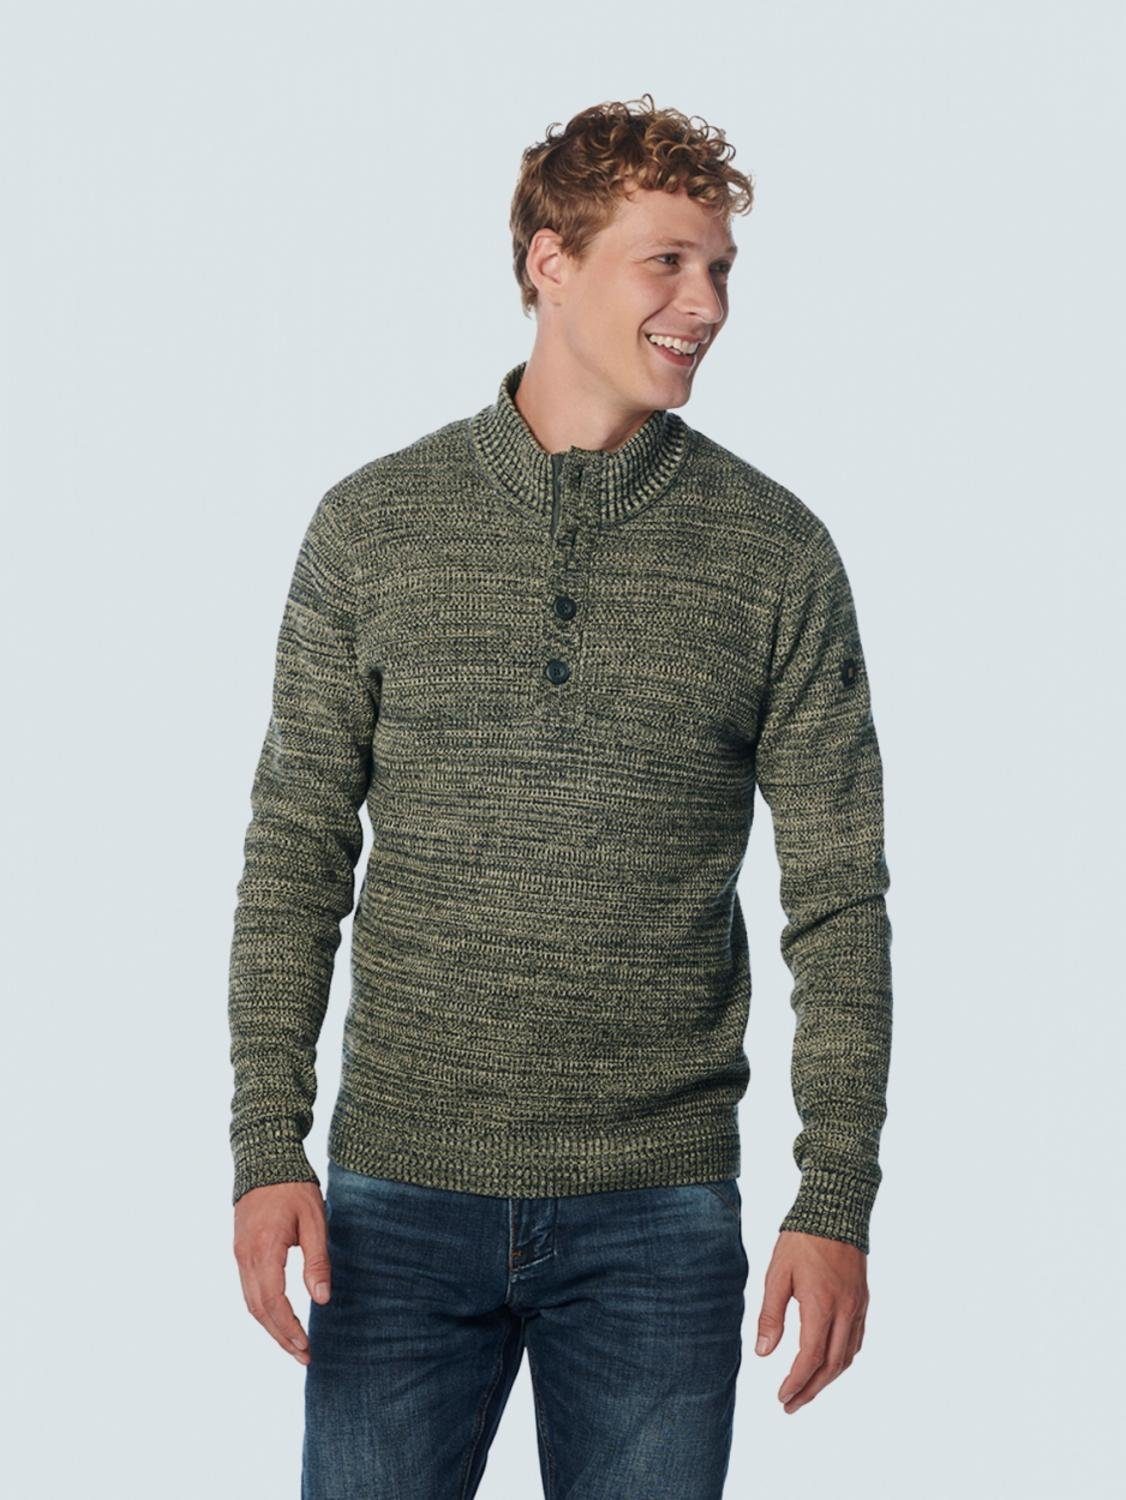 NO EXCESS Sweatshirt Pullover Half Zipper + Button Multi